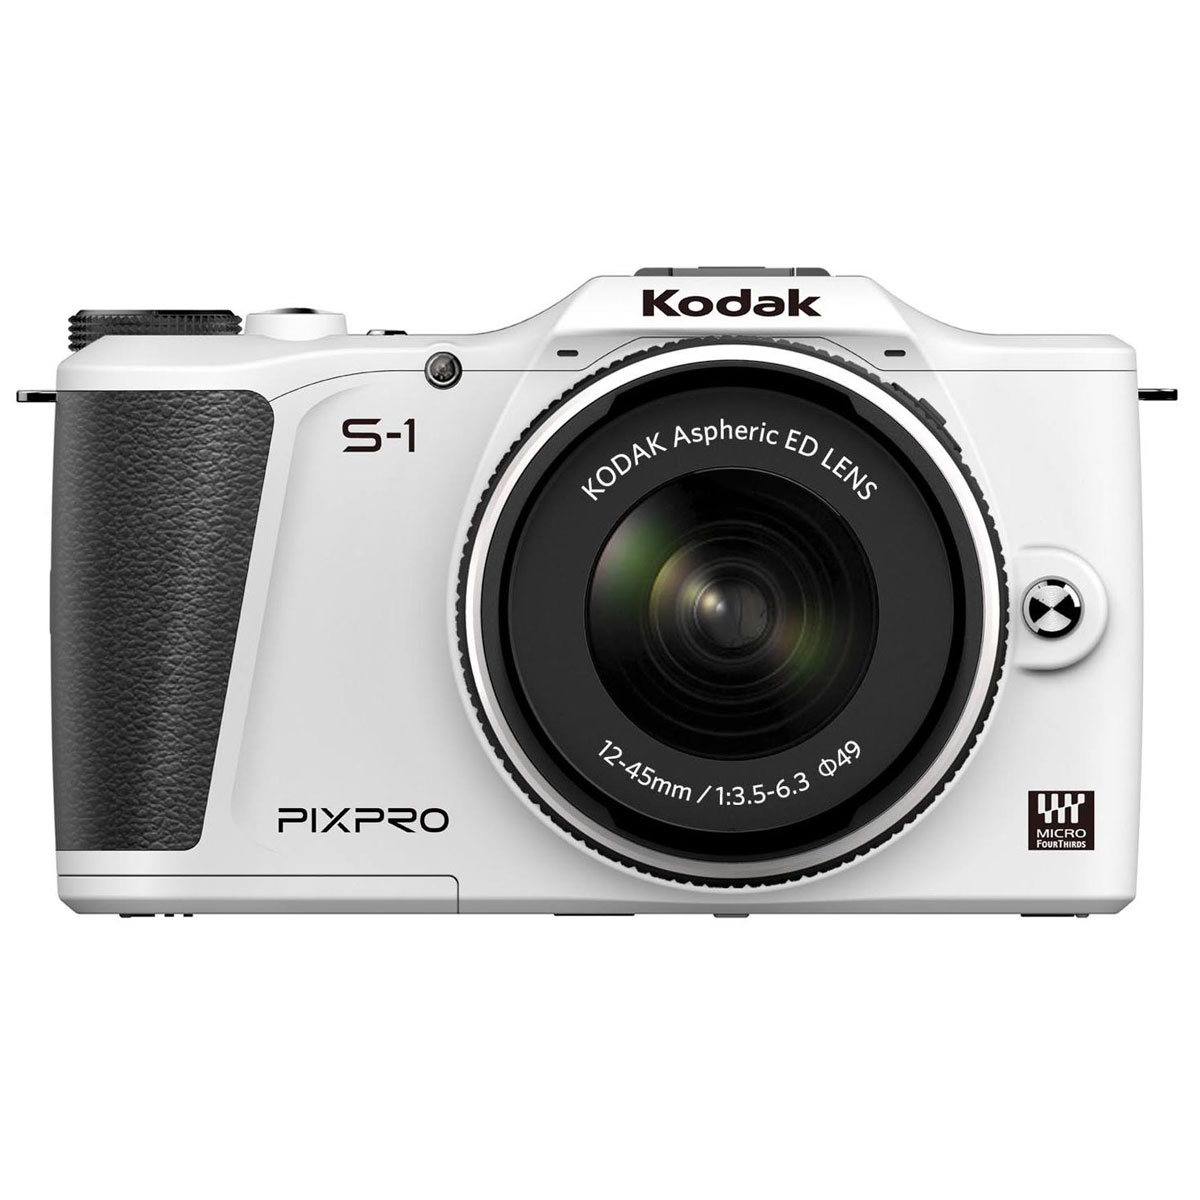 Kodak PIXPRO S-1 (已停產) 香港價錢、相機規格及相關報道- DCFever.com